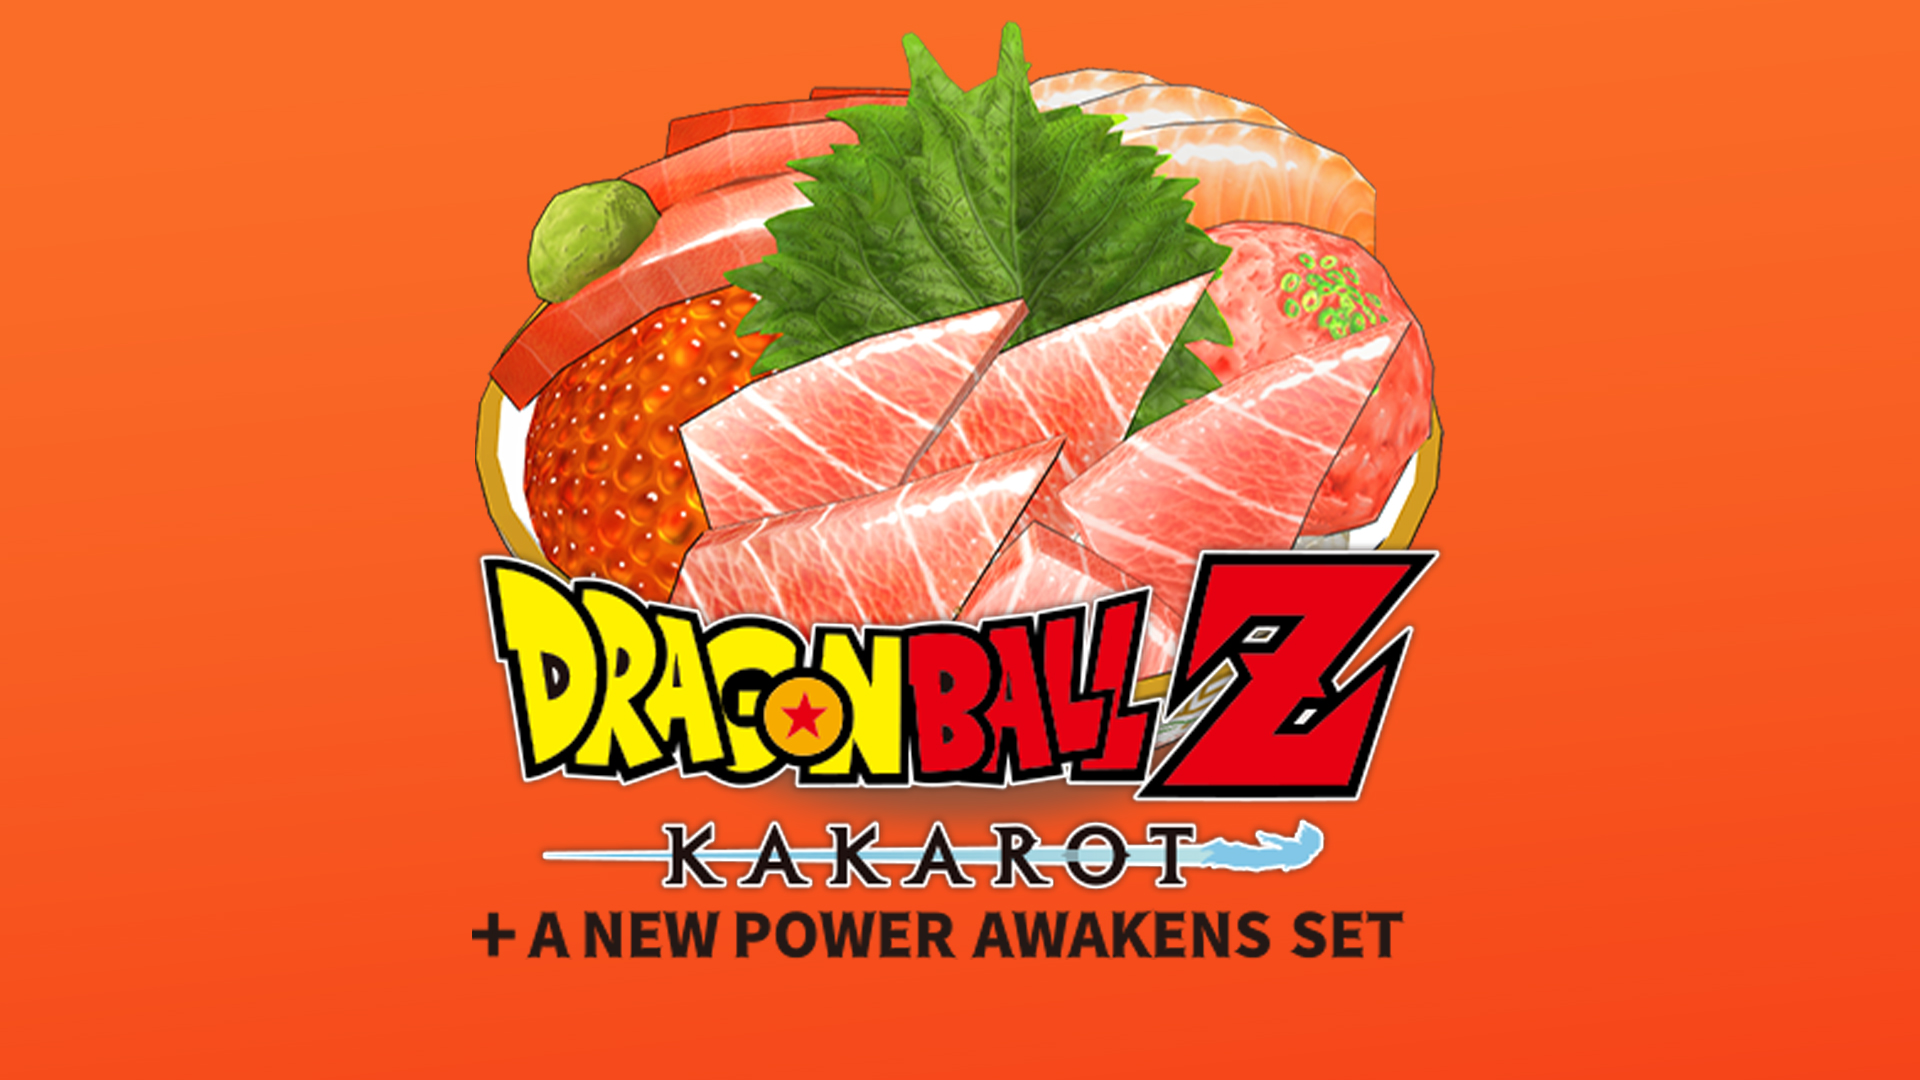 DRAGON BALL Z: KAKAROT + A NEW POWER AWAKENS SET Dragon Palace Bowl